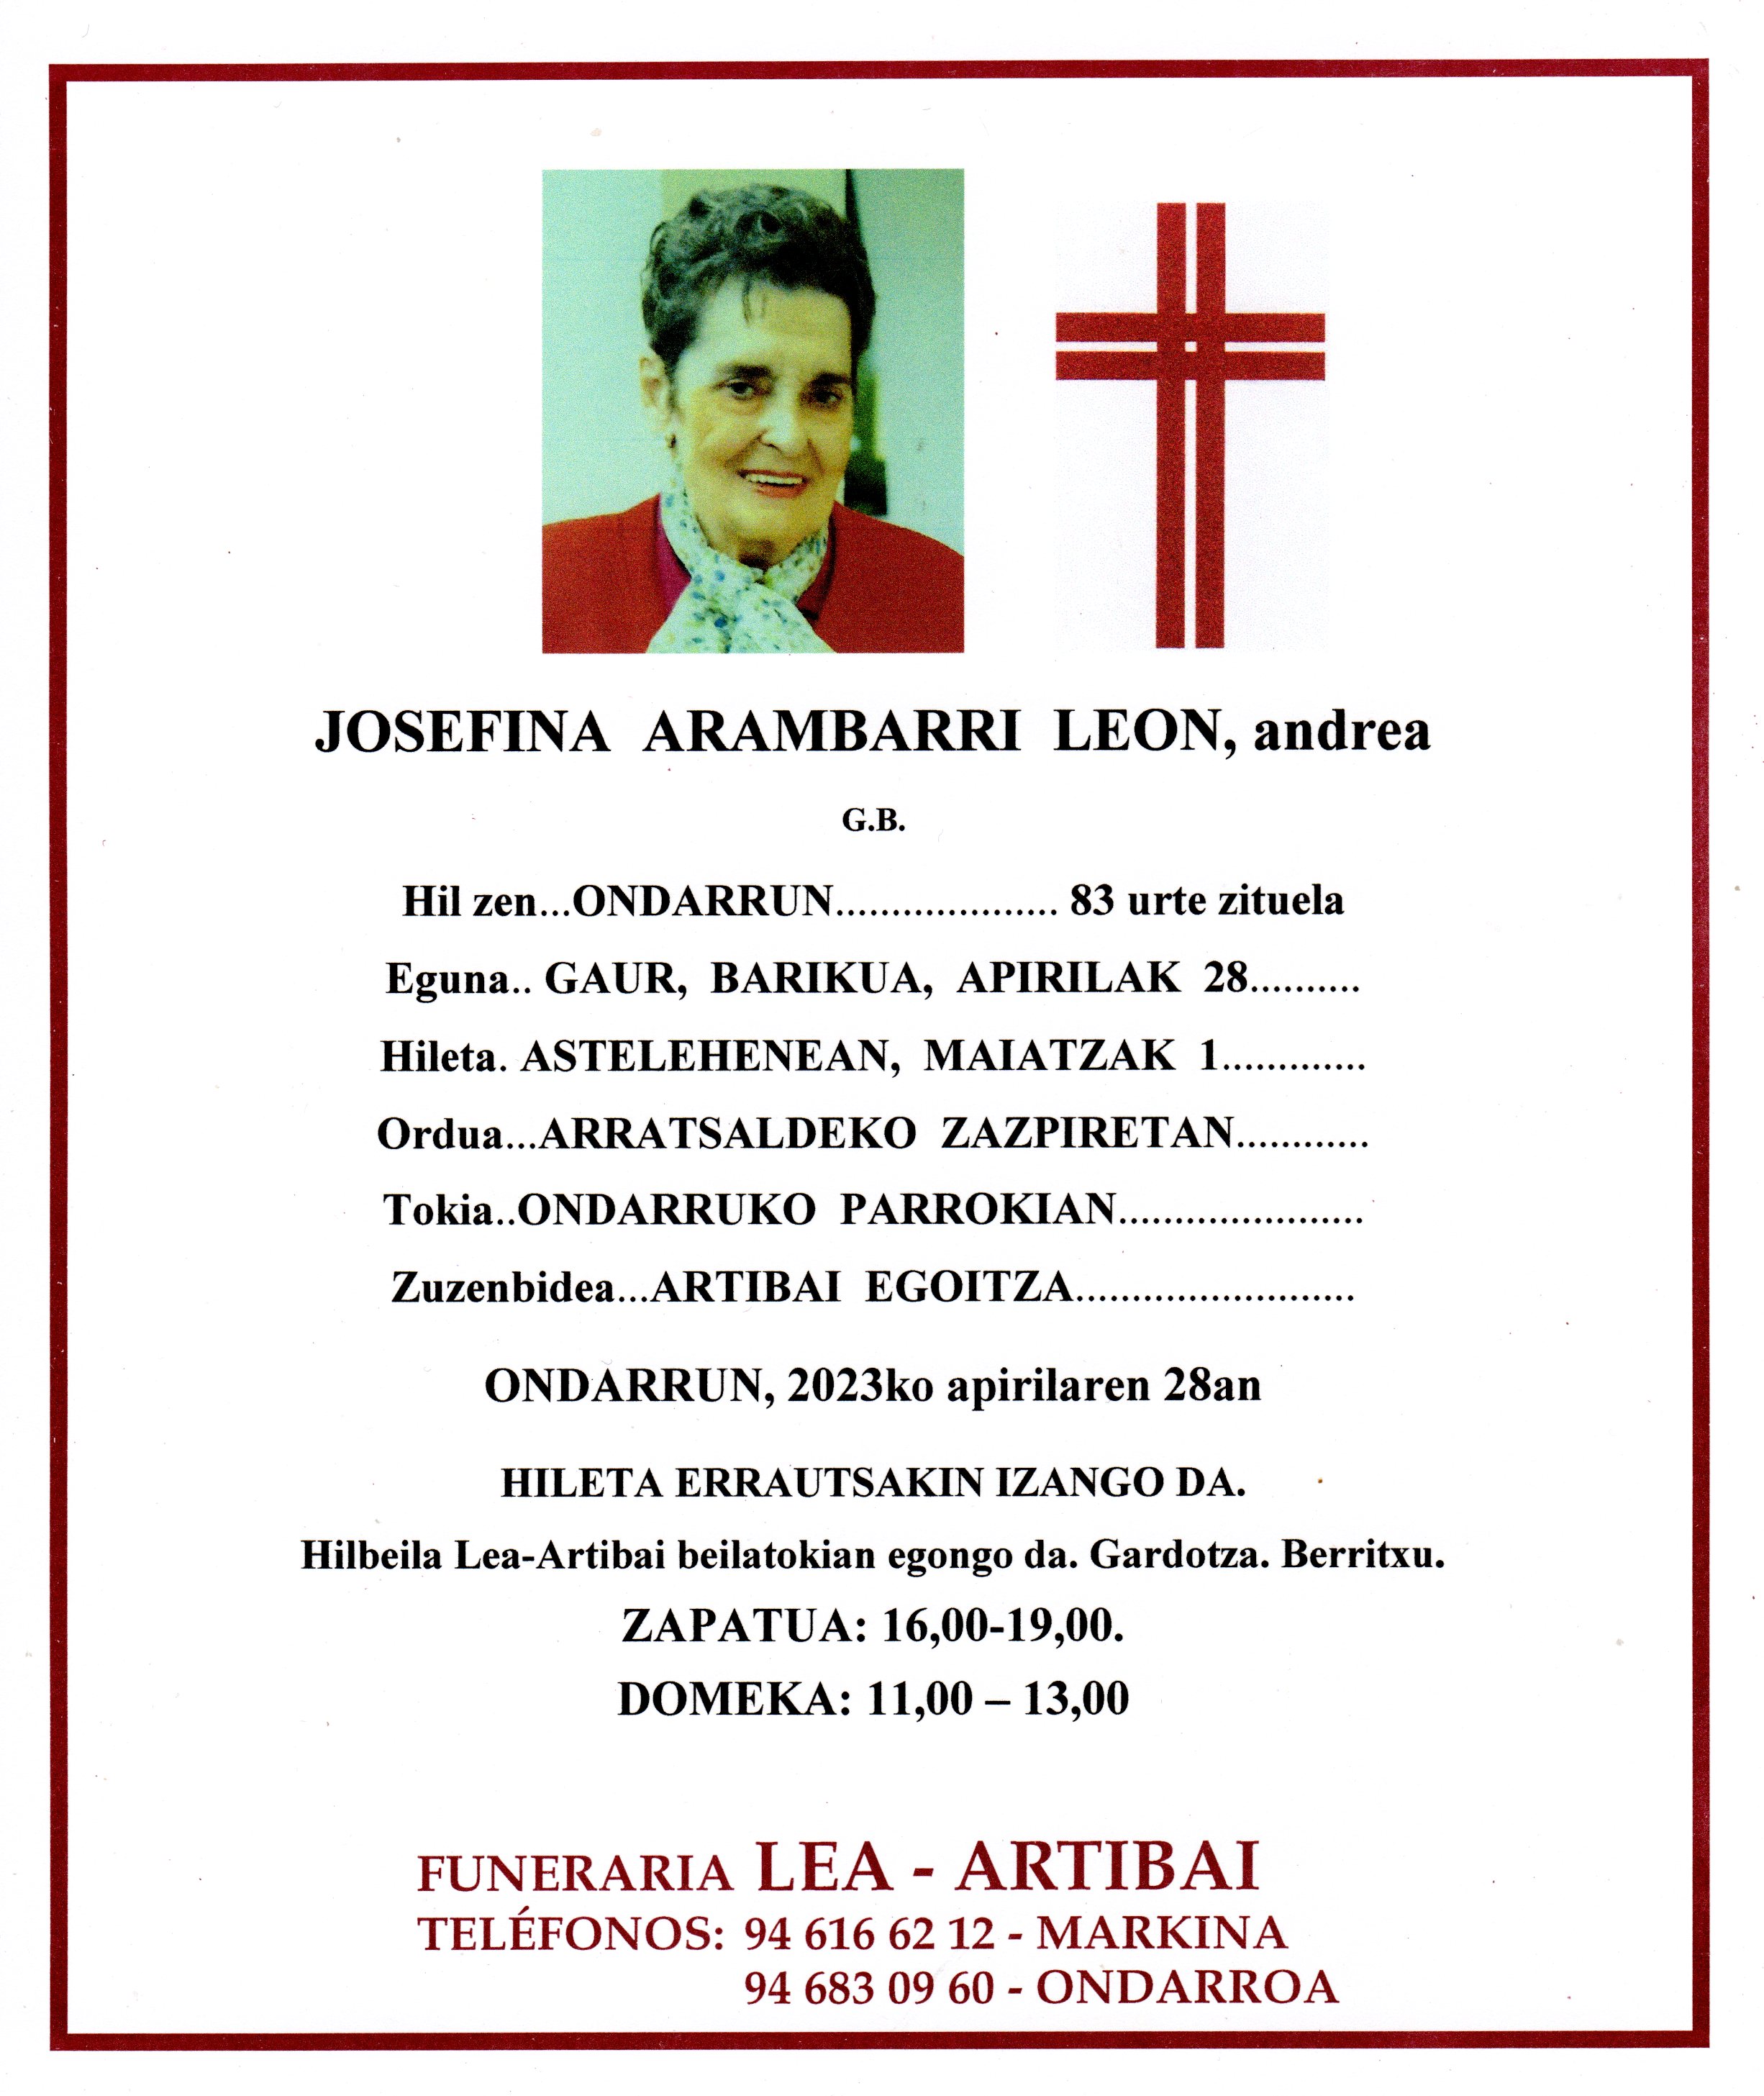 Josefina Arambarri Leon